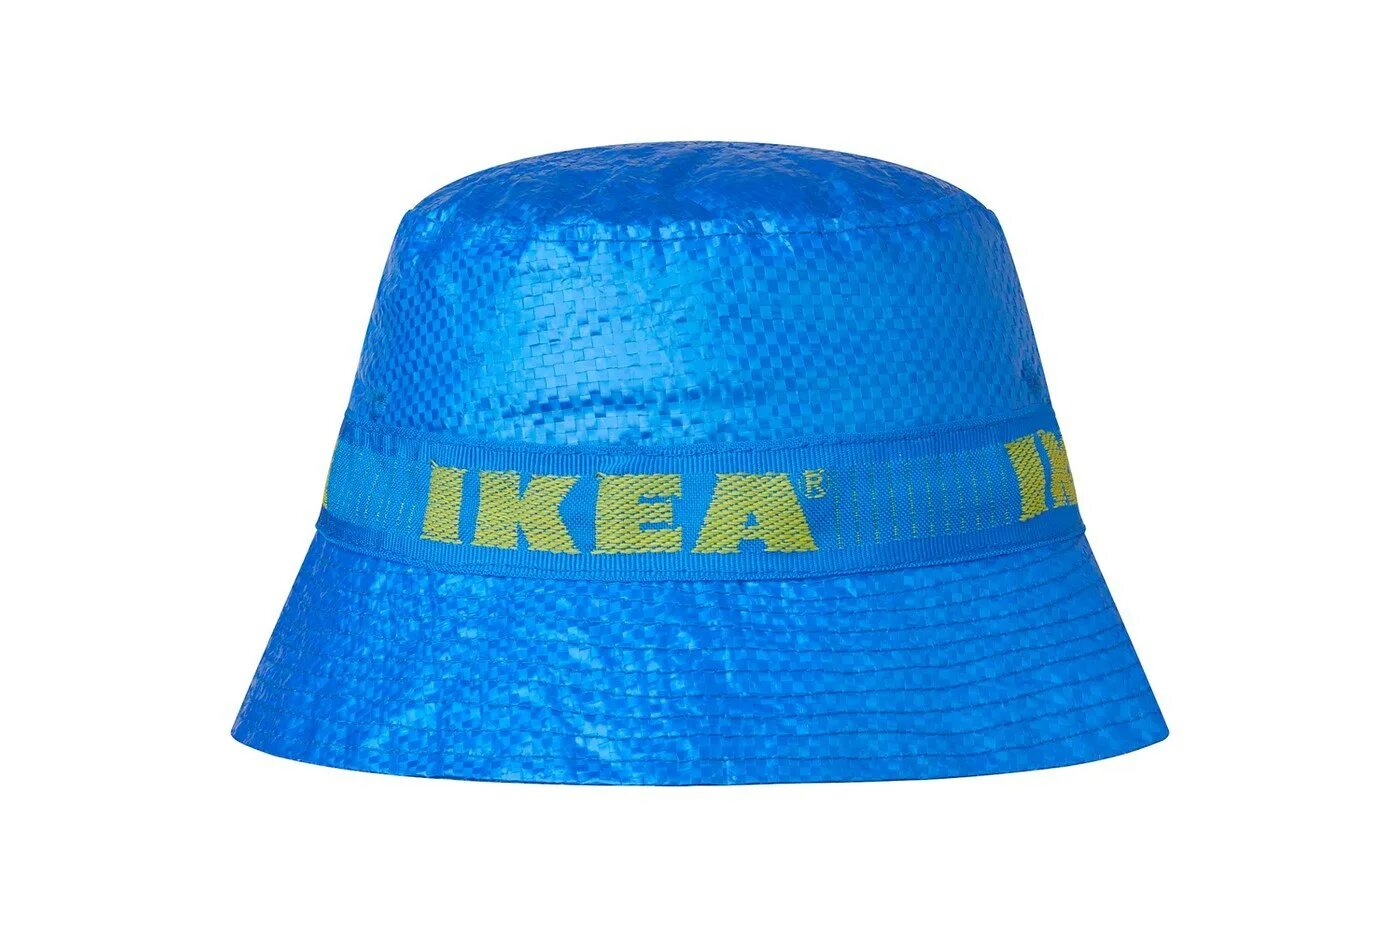 Название панам. Панама ikea. Кепка ikea. Панама NB Bucket hat голубая. Желтая панамка.